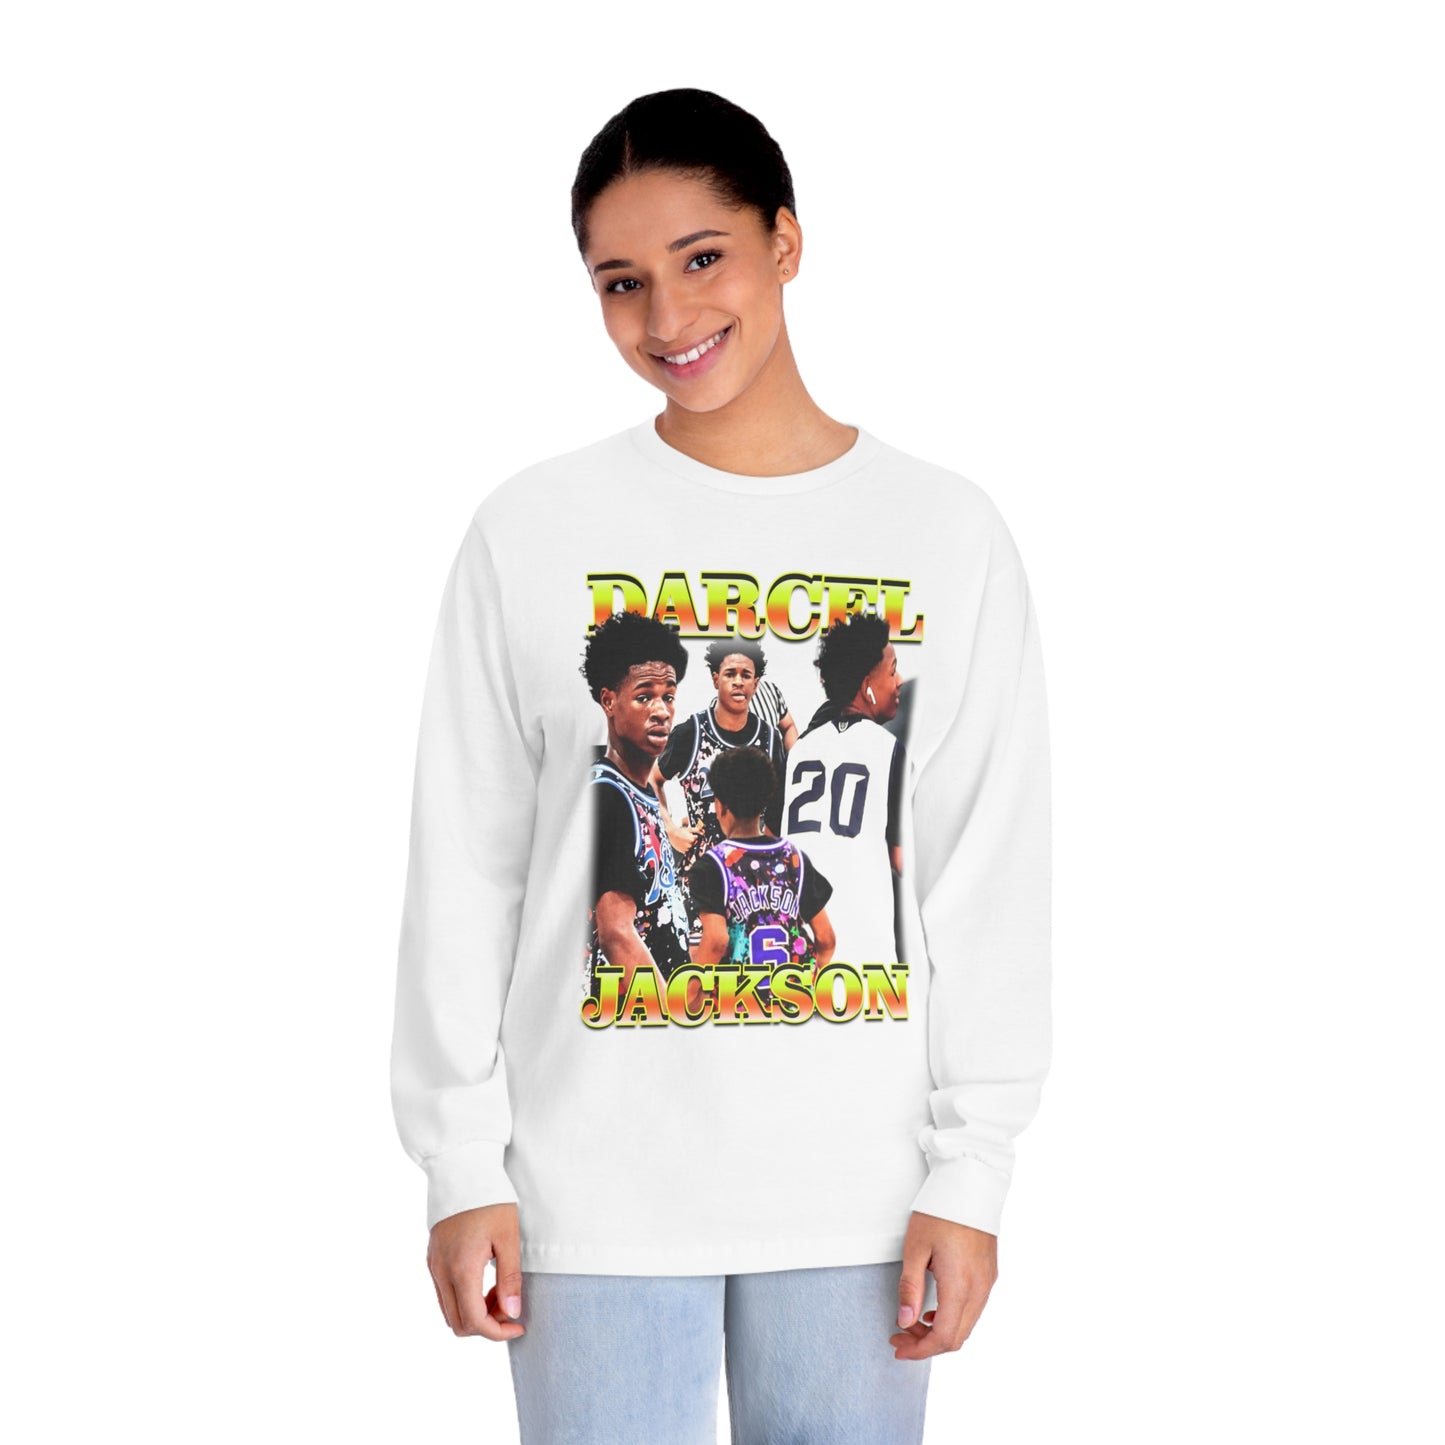 Darcel Jackson Long Sleeve T-Shirt